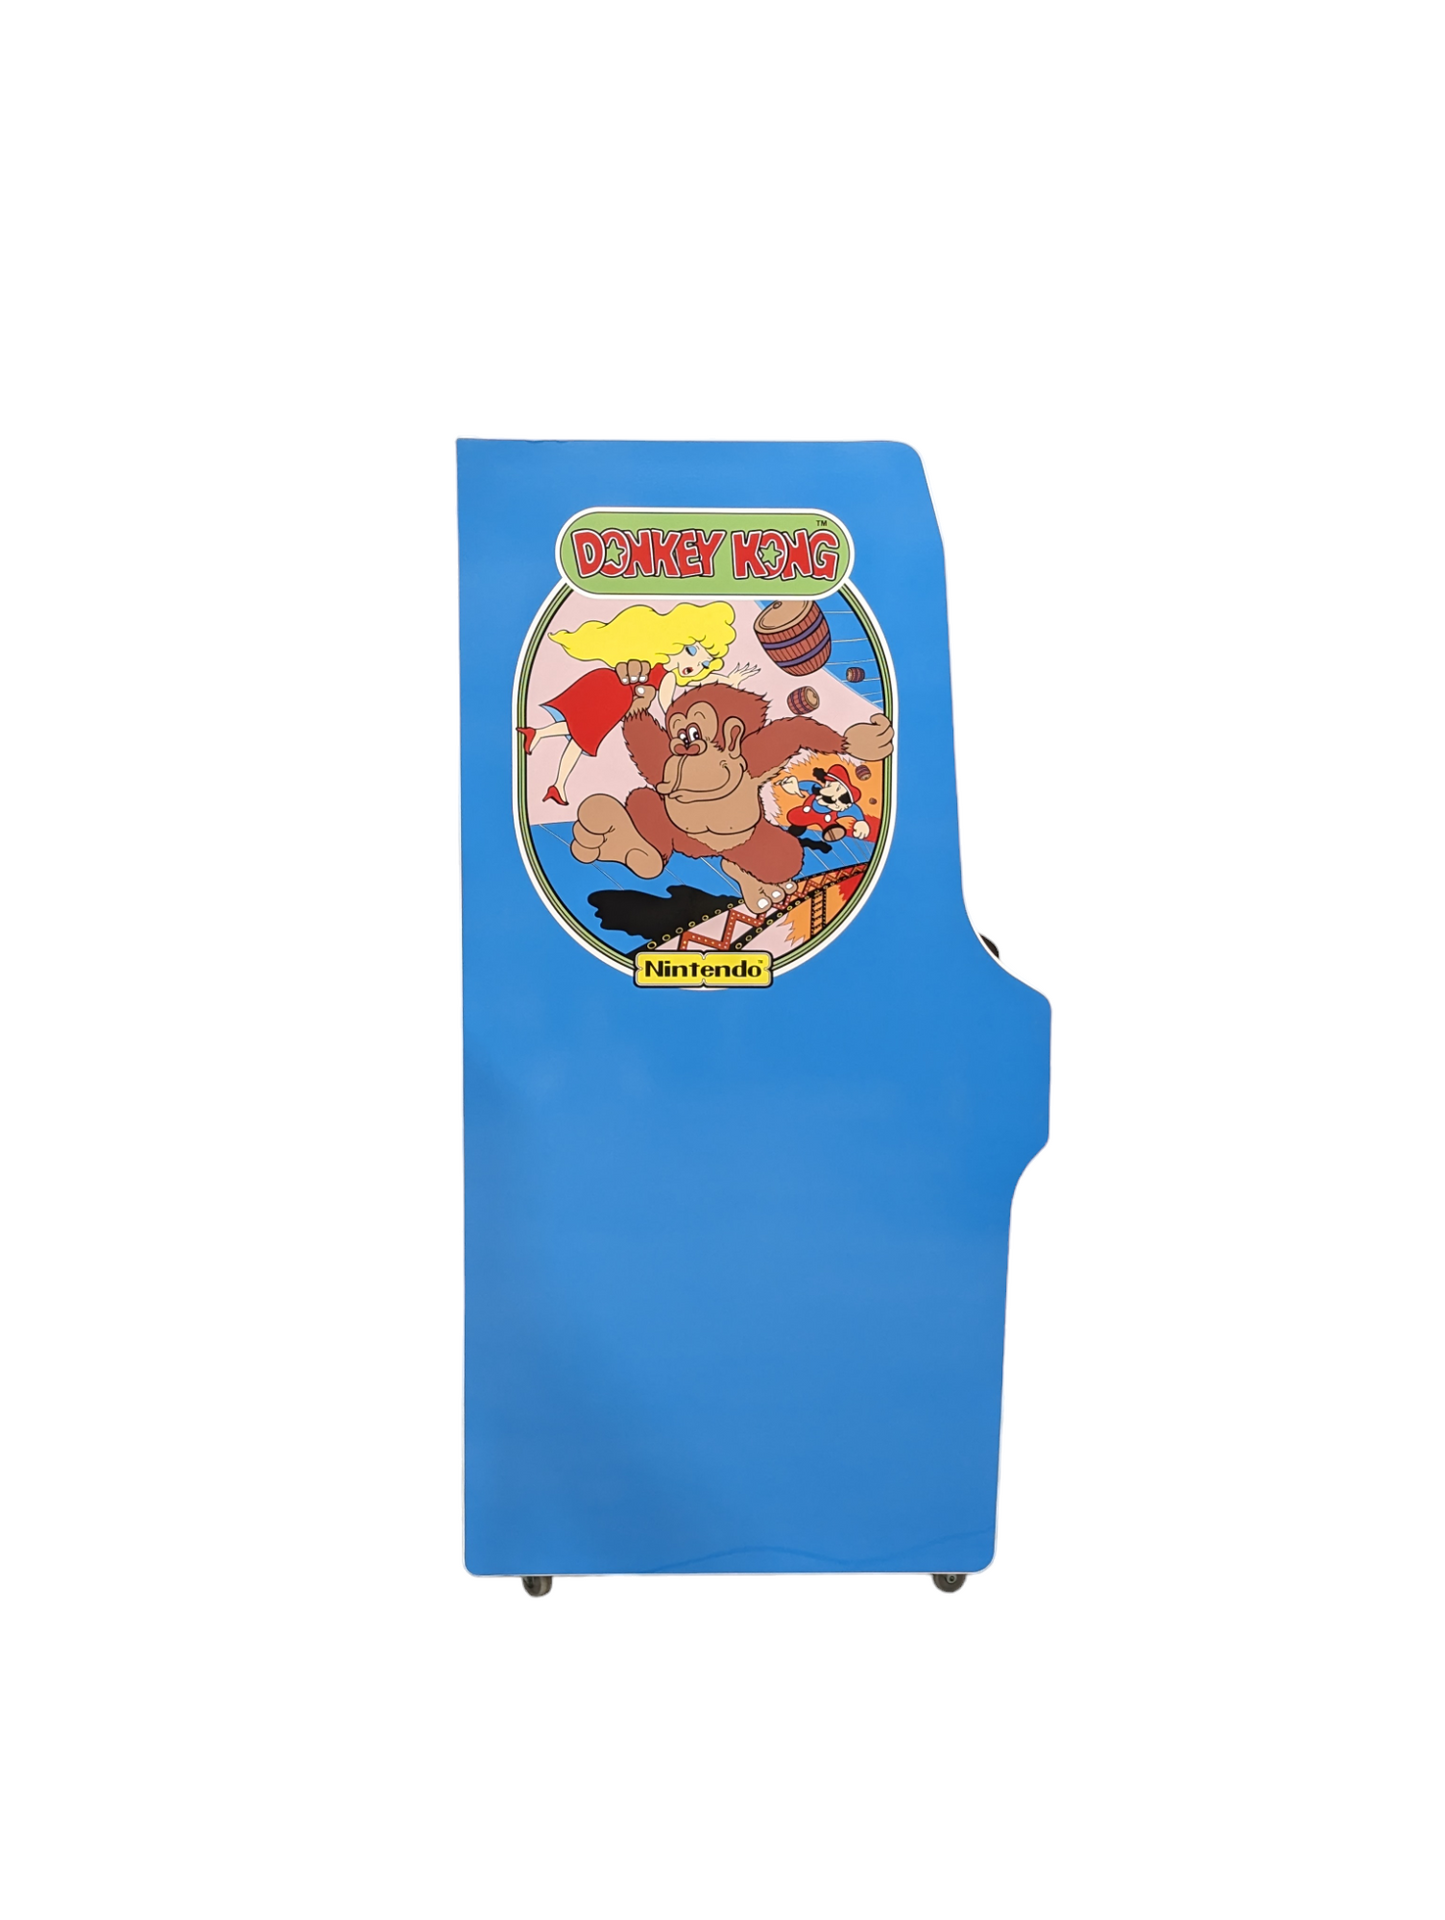 Donkey Kong Arcade Machine - Accurate Replica